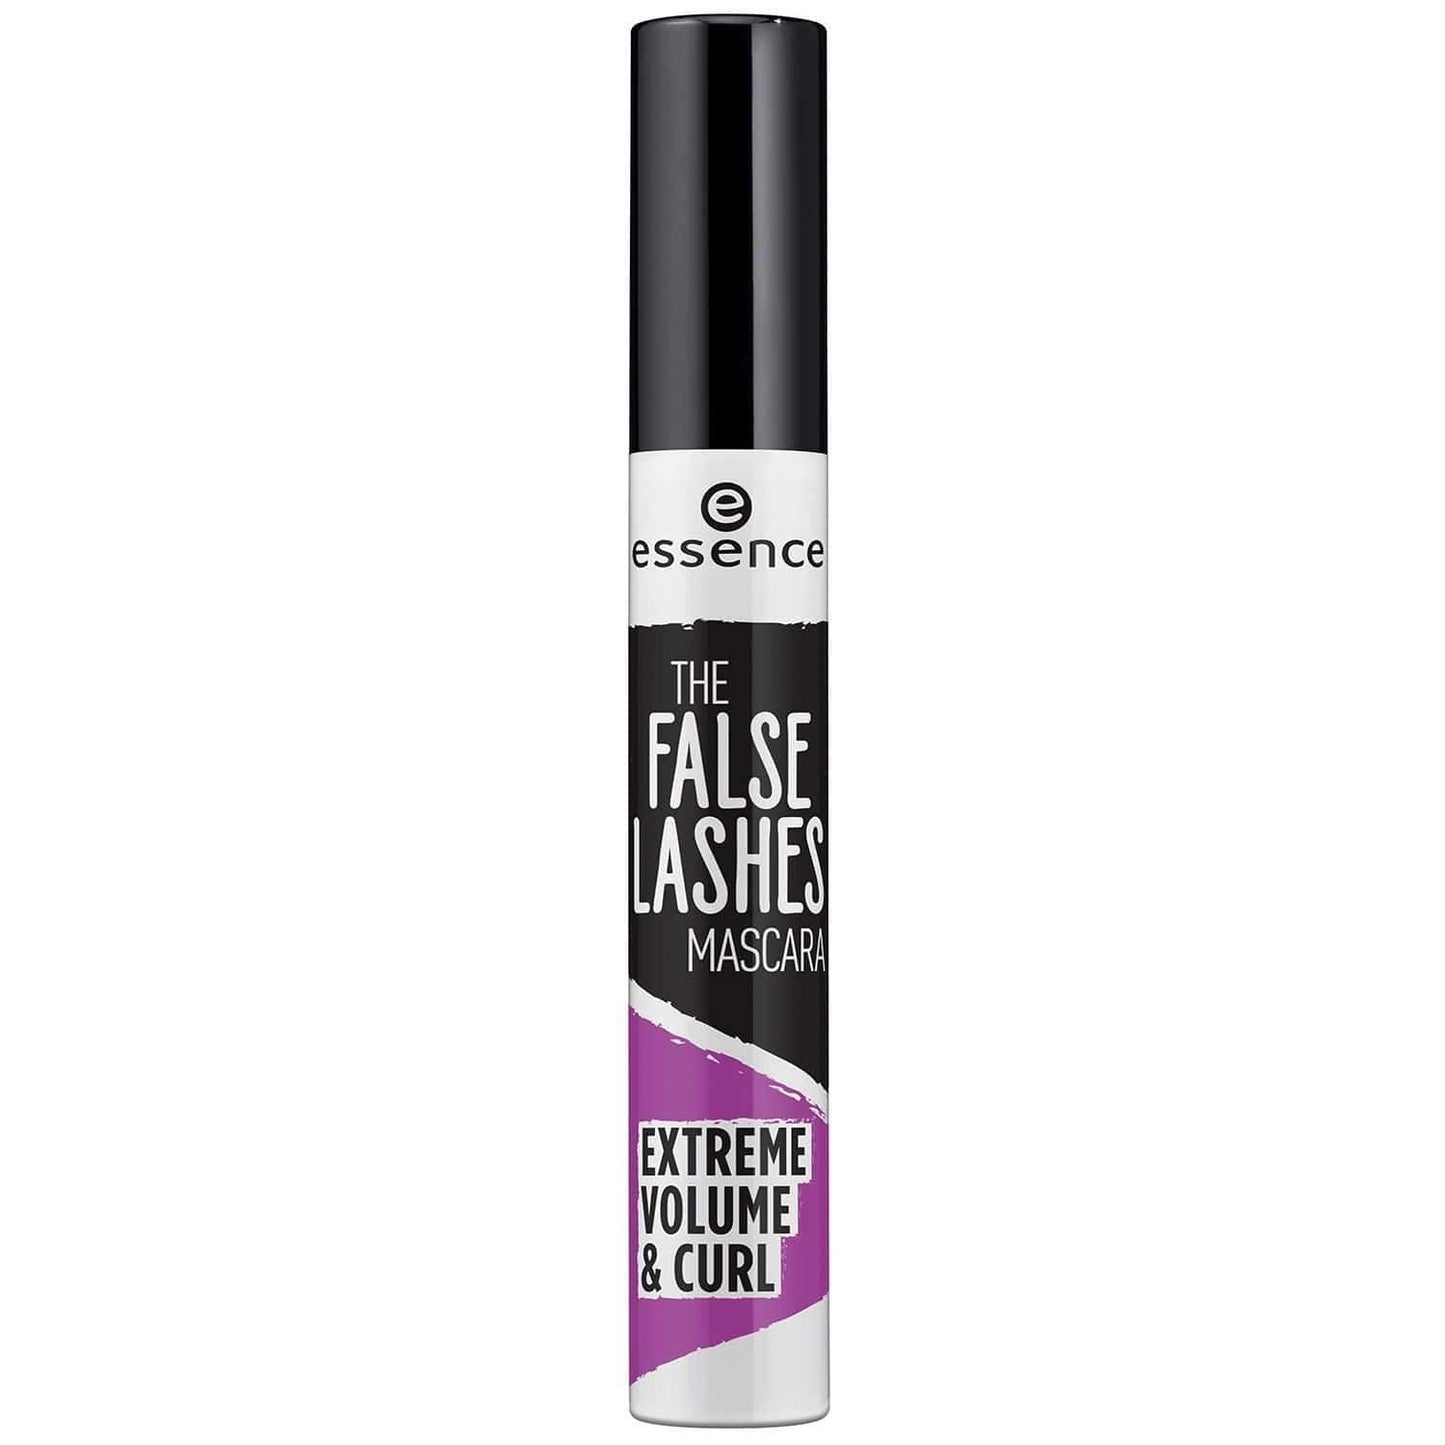 essence | The False Lashes Mascara Extreme Volume and Curl Minoustore